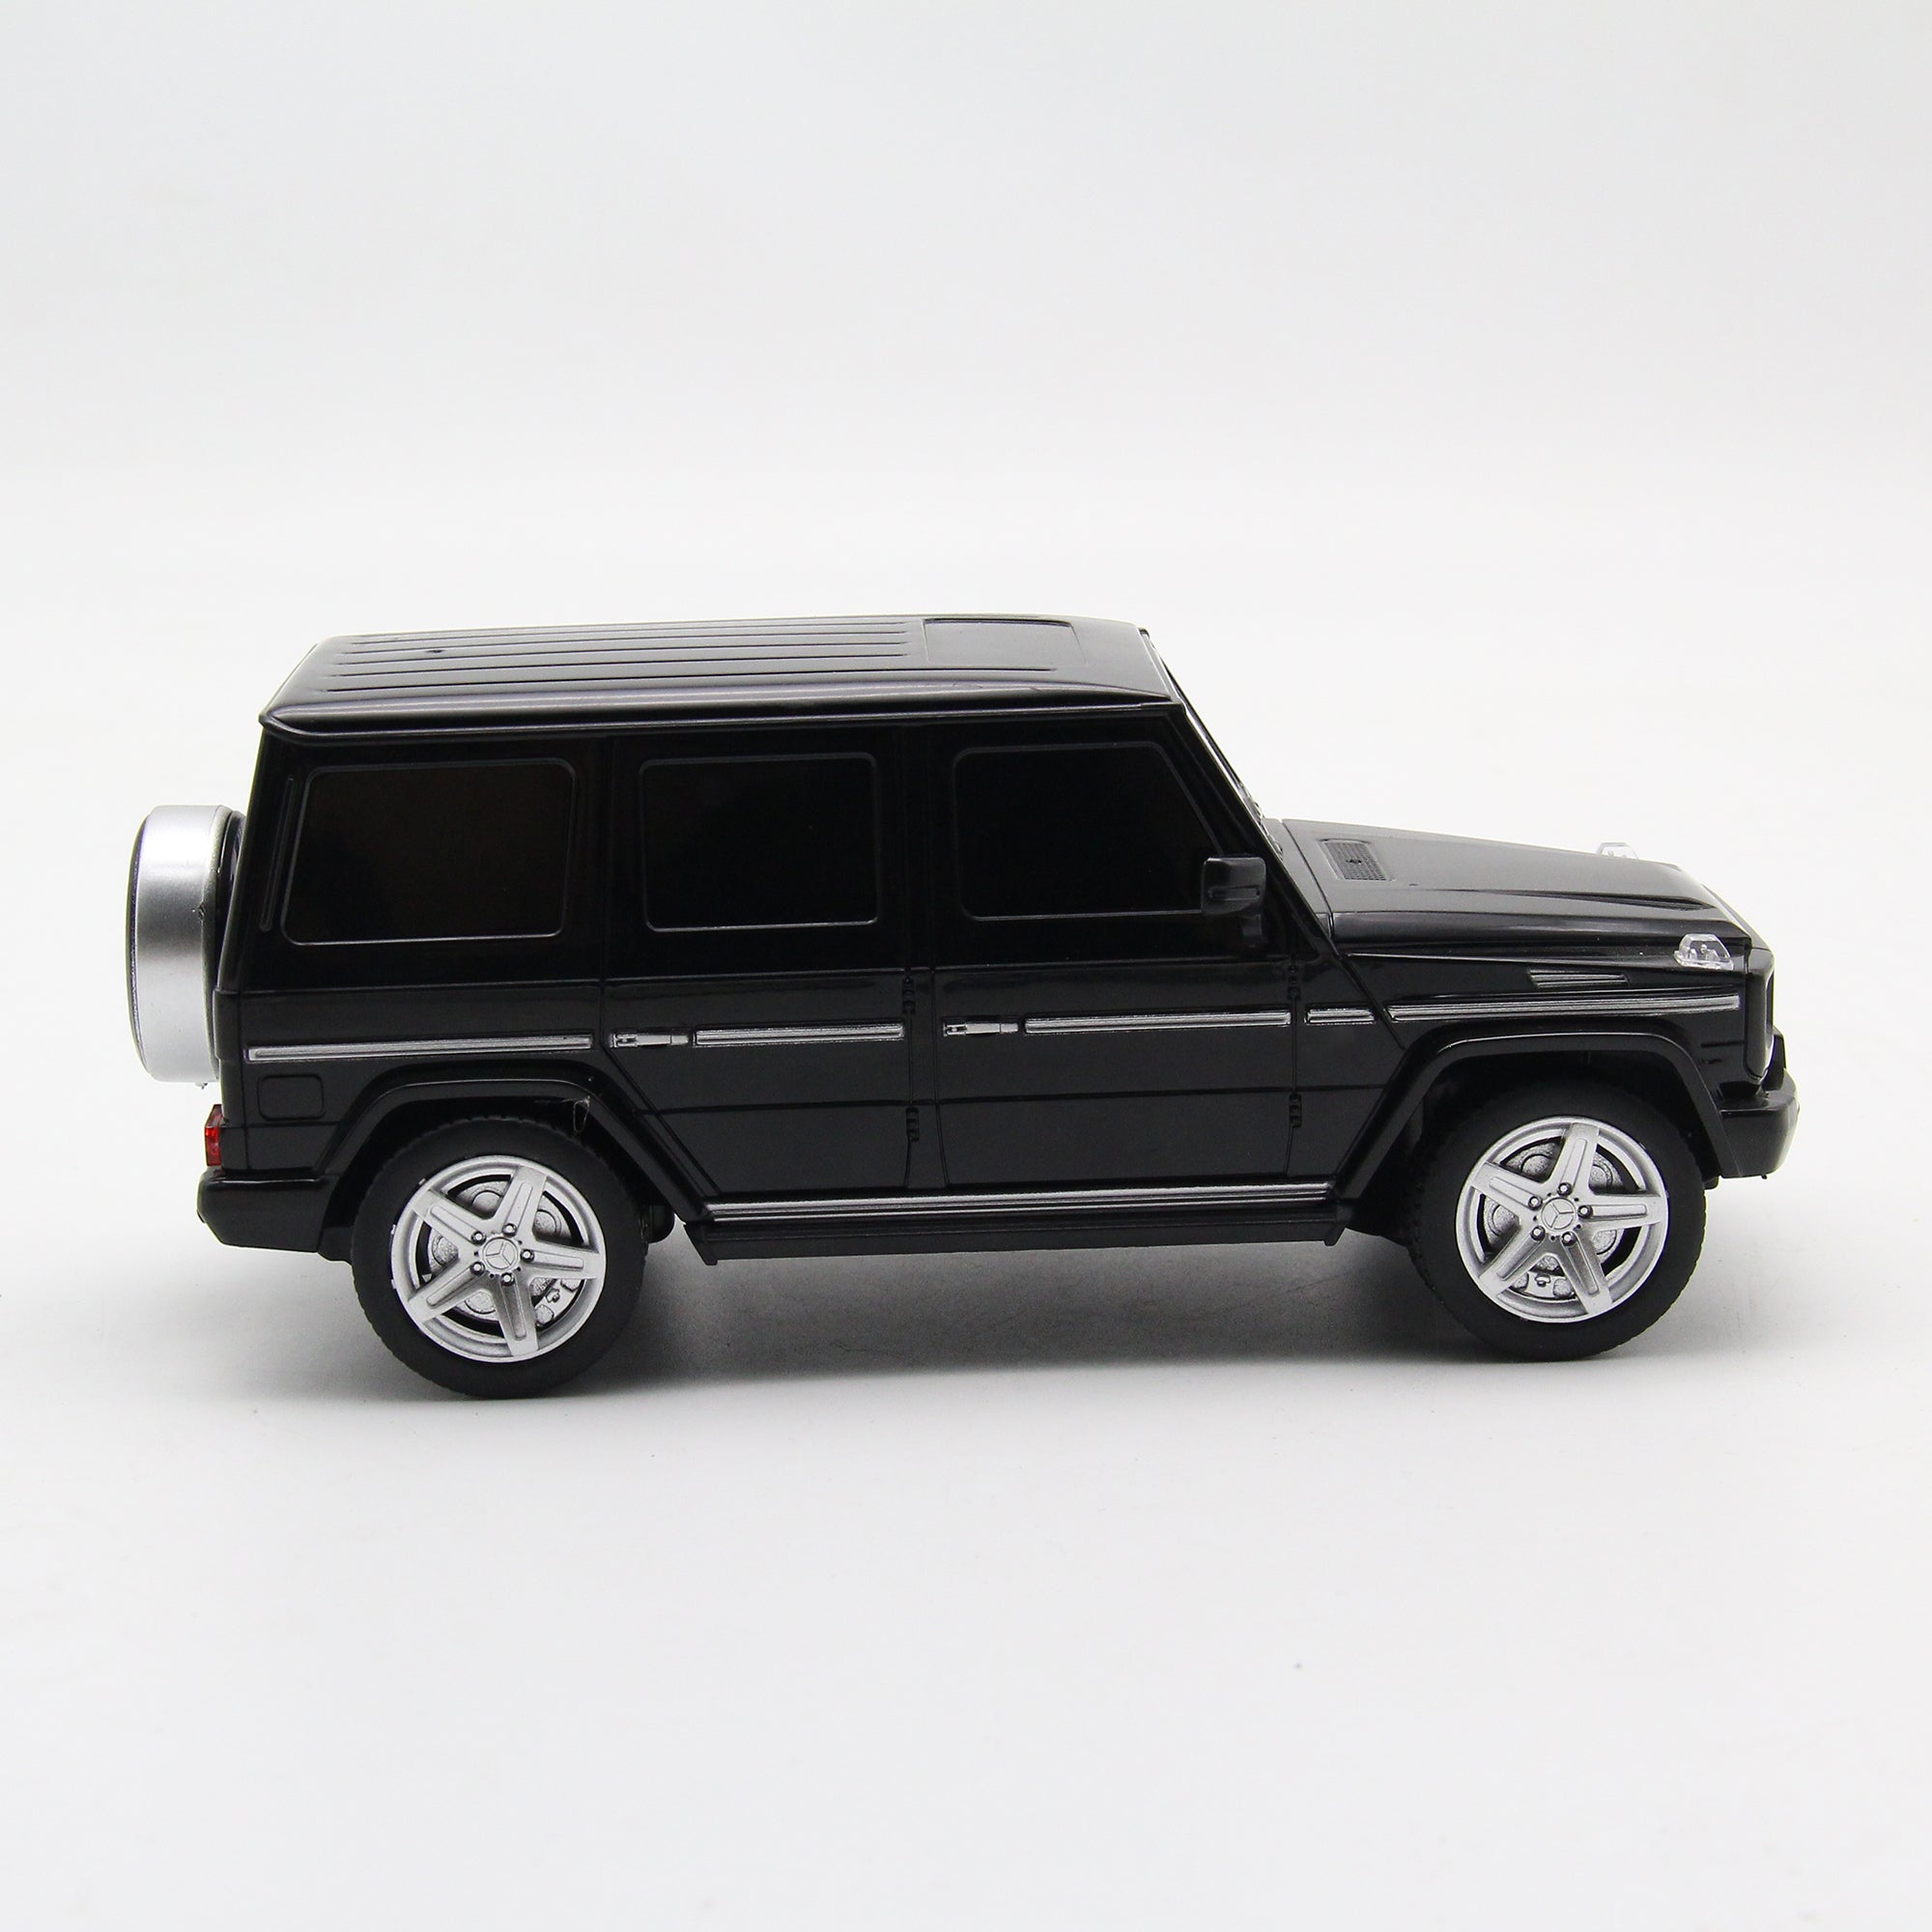 Playzu Remote Control Car Series, SUV R/C 1:24 – Black